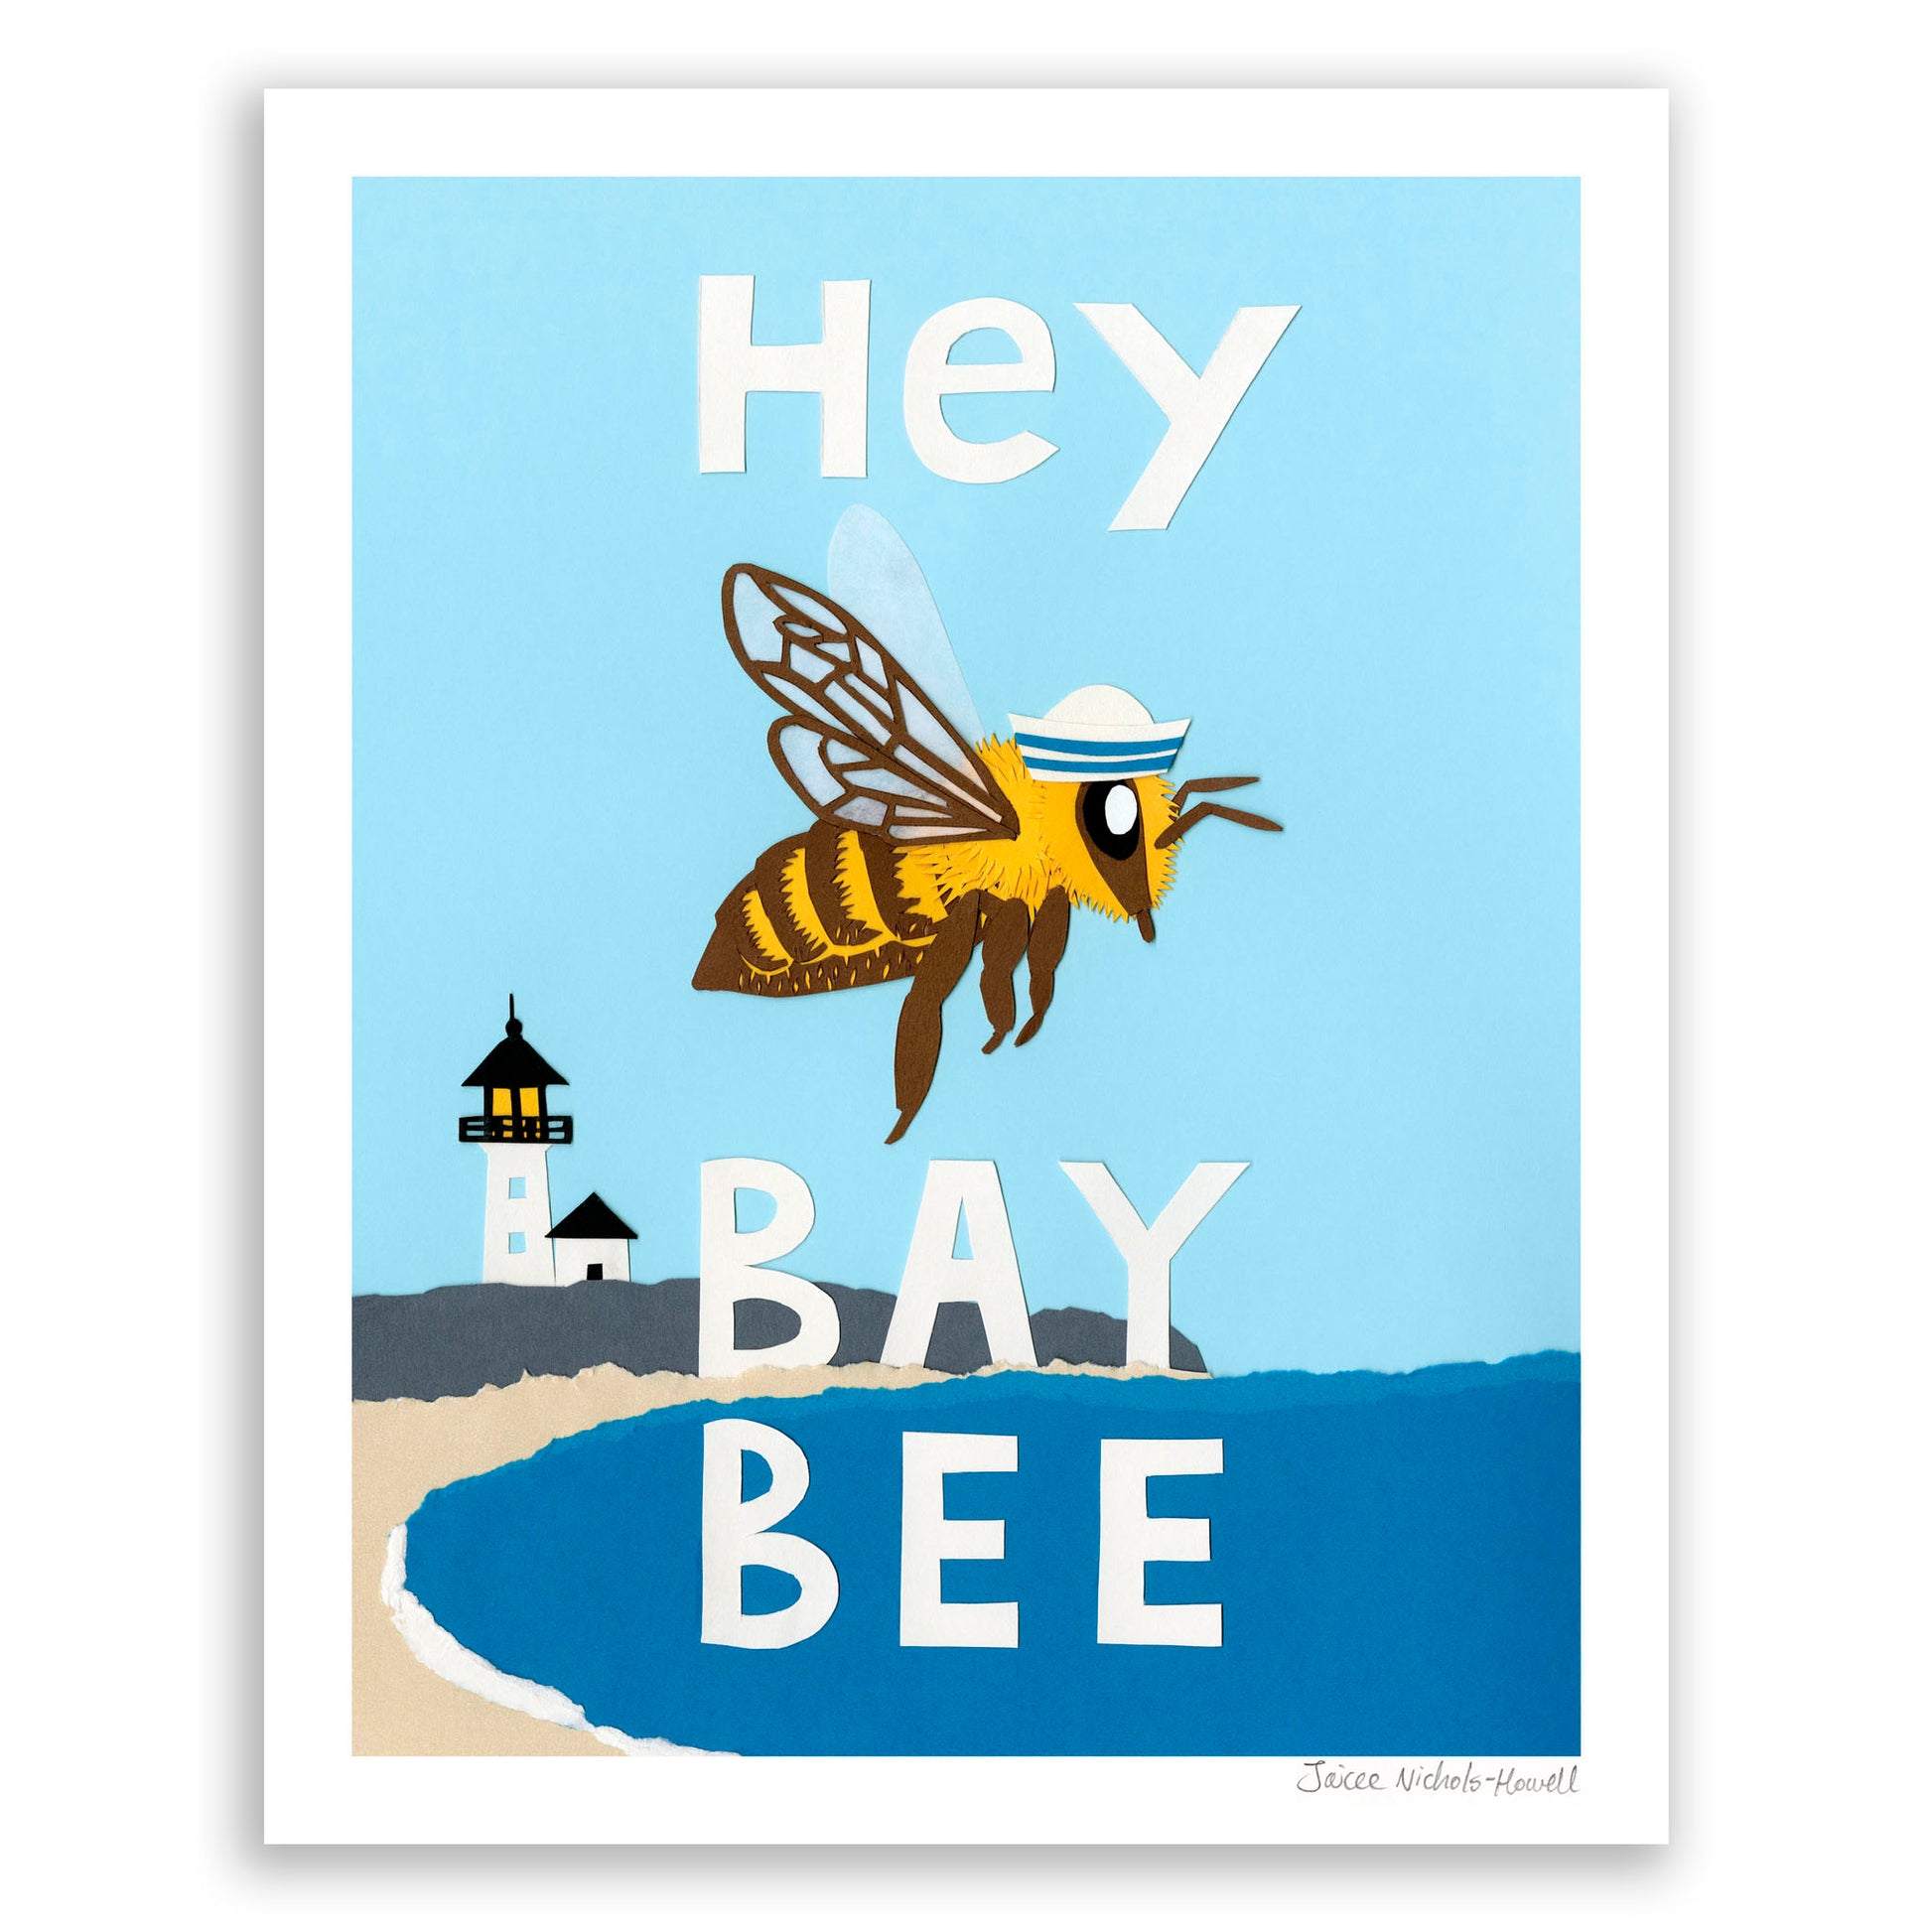 Hey Bay Bee Print